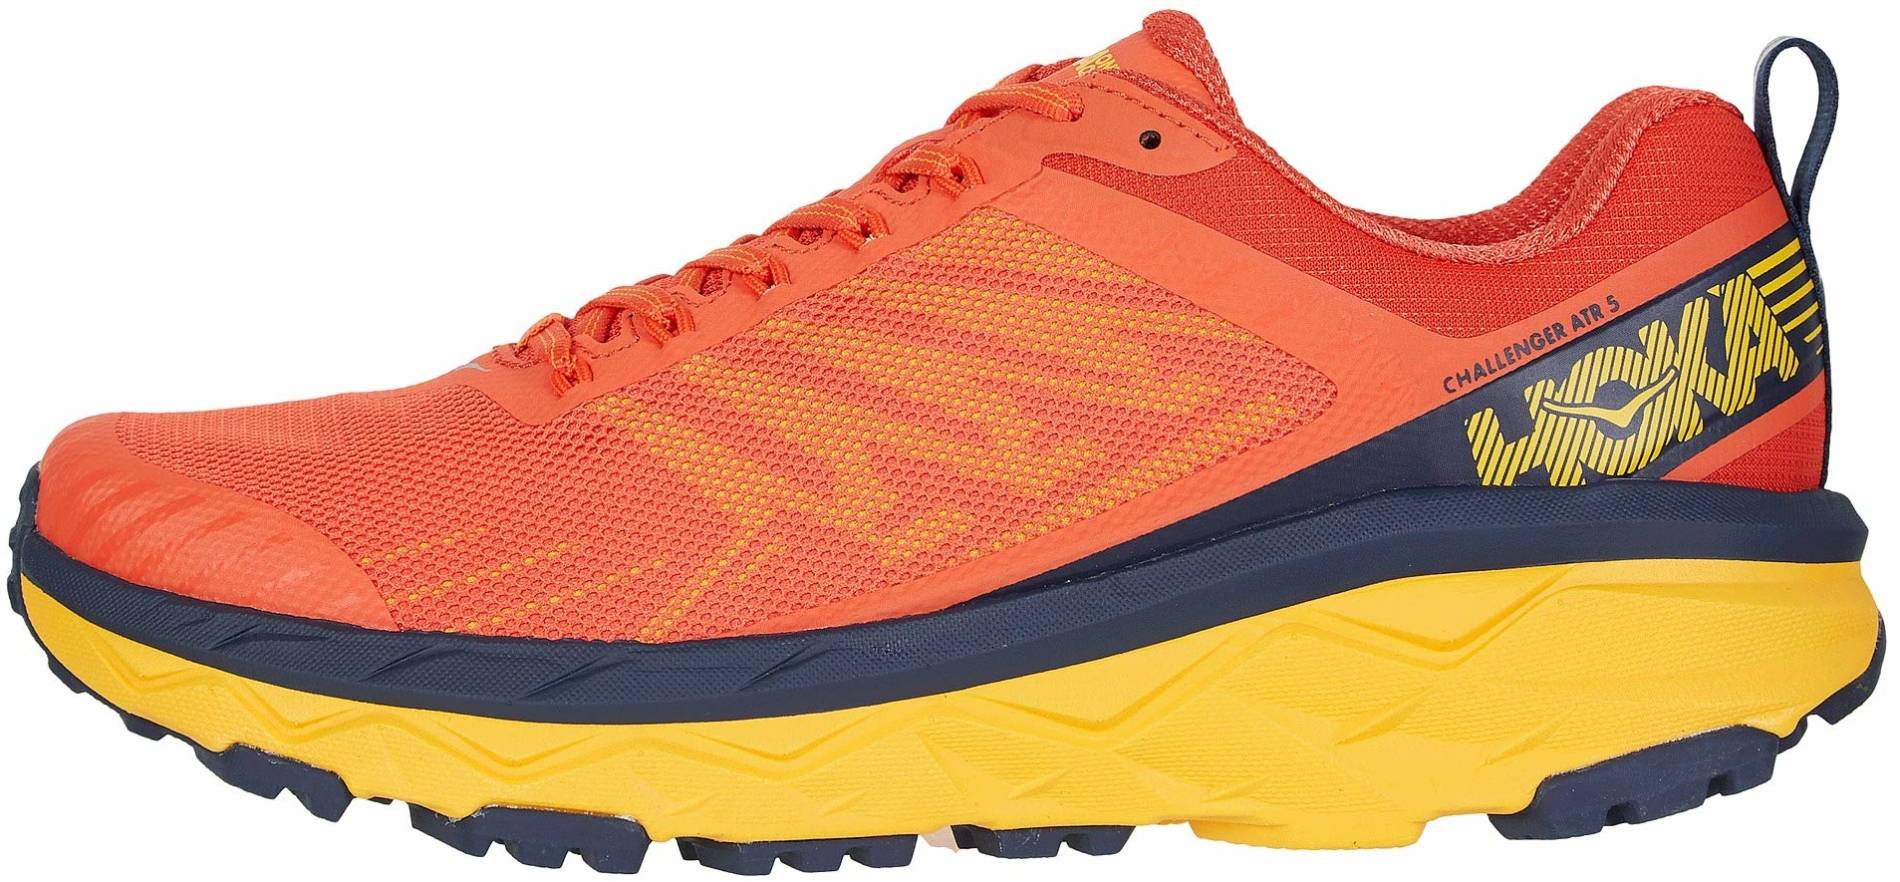 Save 41% on Orange Running Shoes (86 